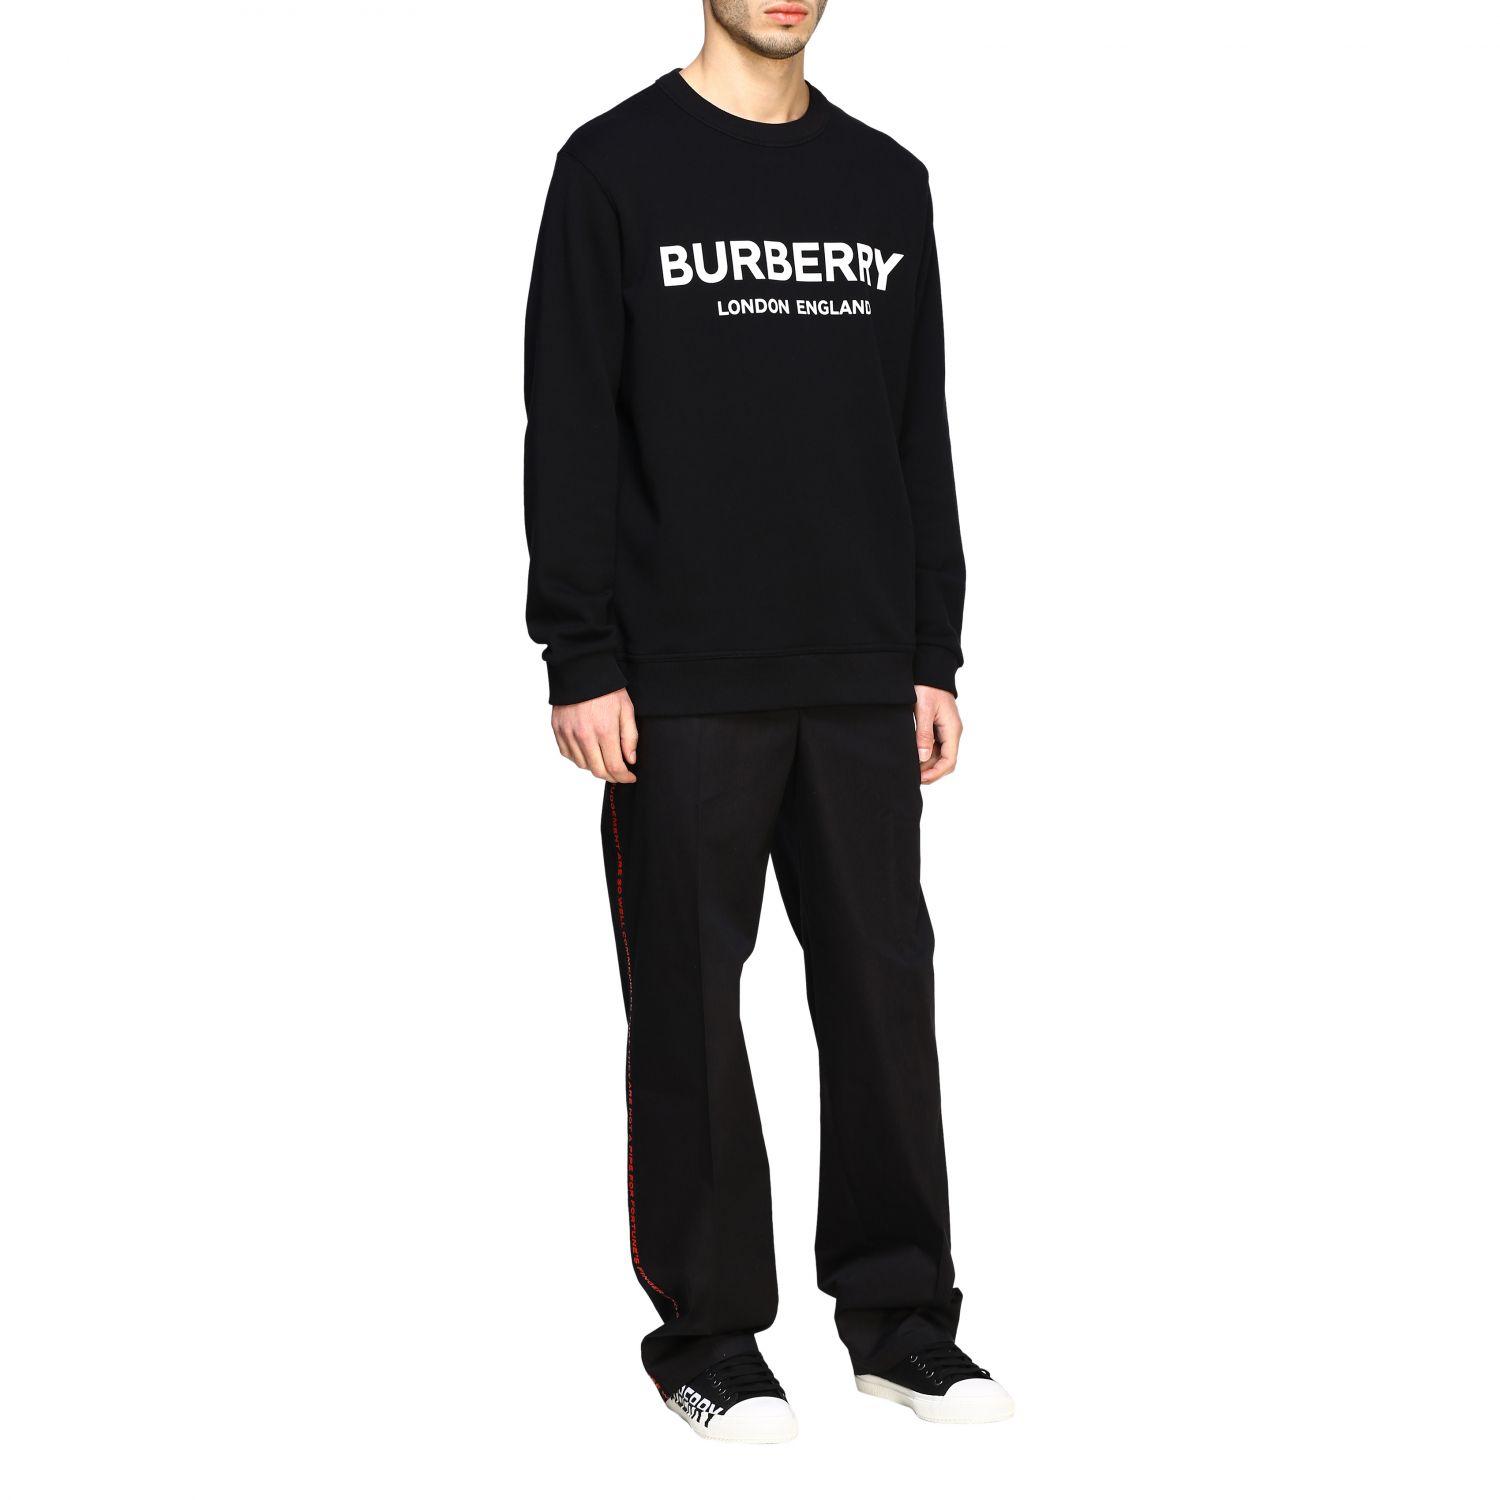 Burberry Crewneck Sweatshirt With Contrasting Logo in Black for Men - Lyst